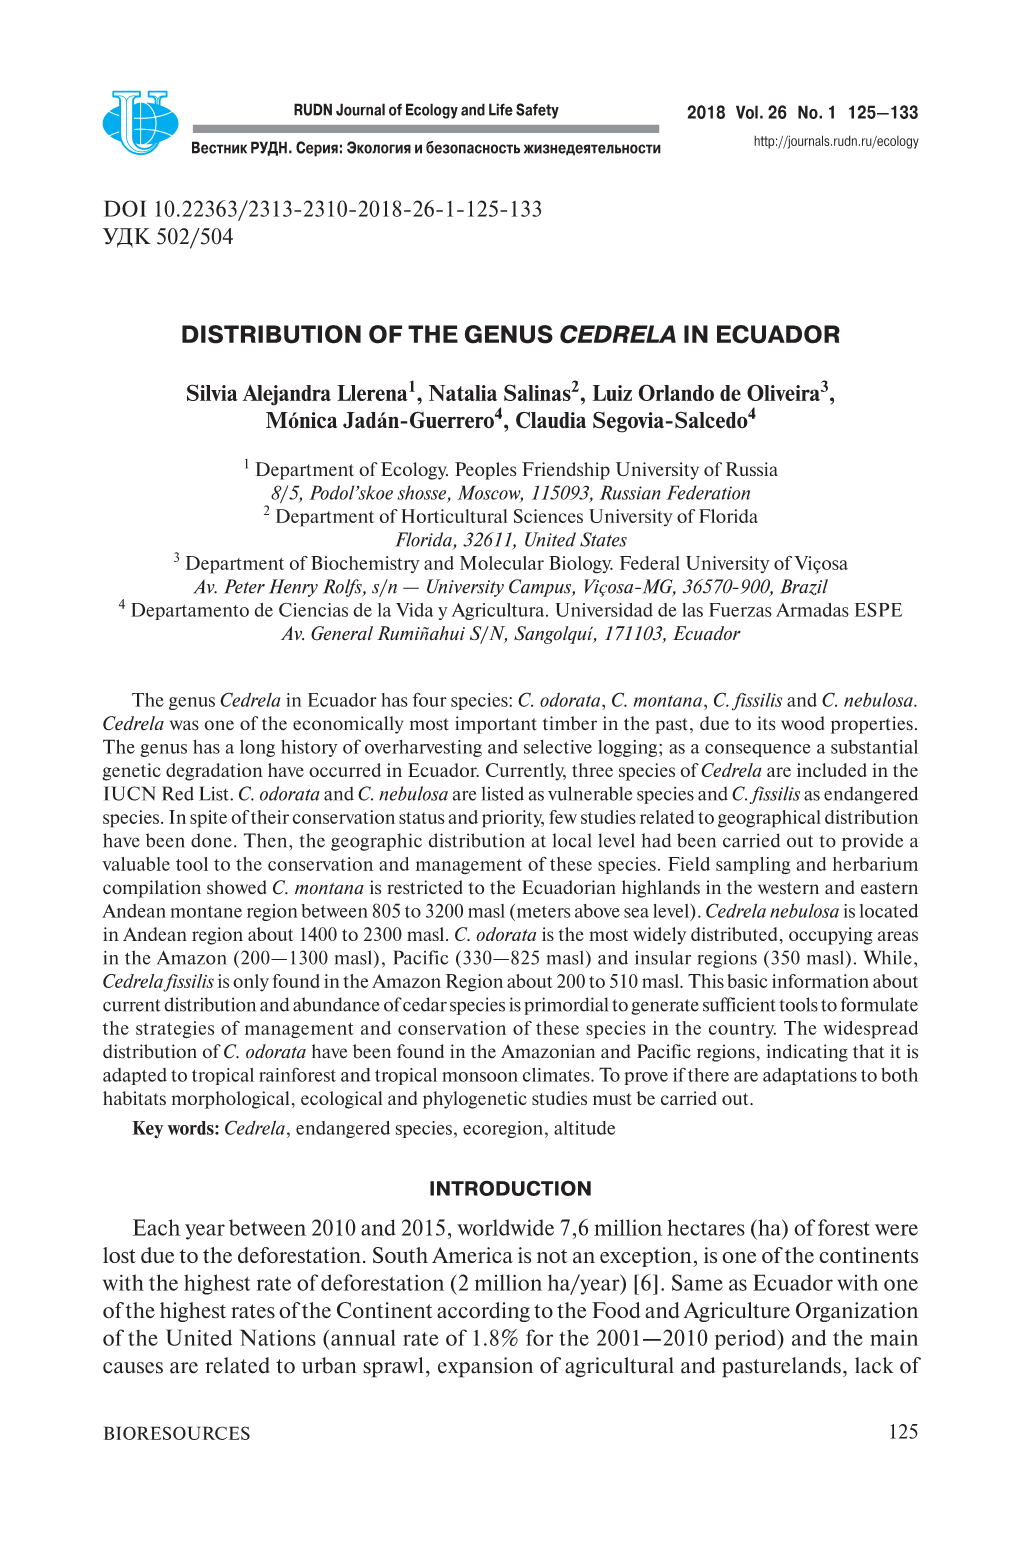 Distribution of the Genus Cedrela in Ecuador